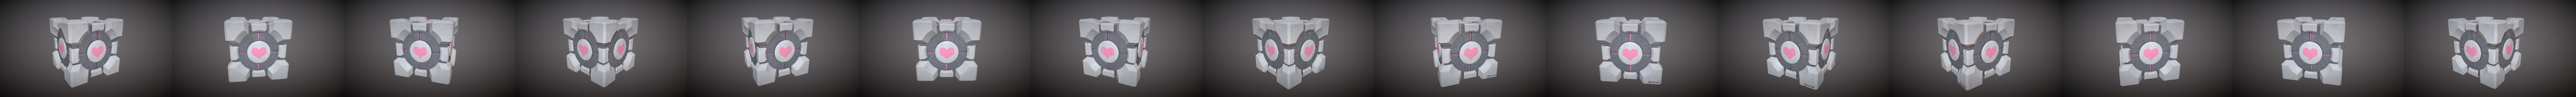 Companion Cube - Download Free 3D model by Michael Klement